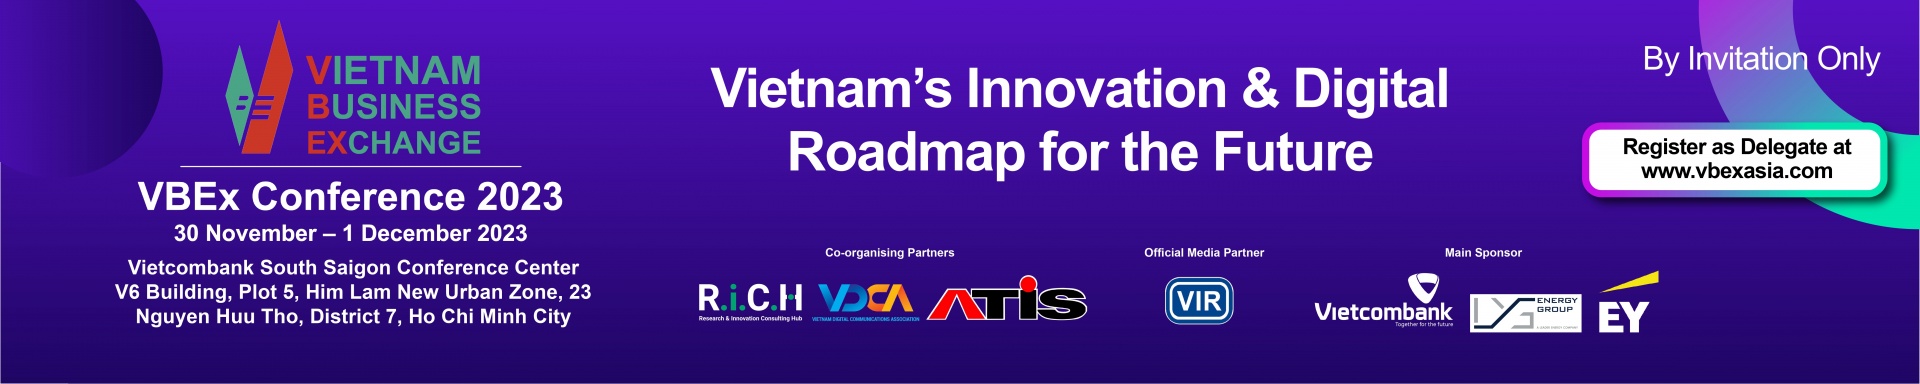 Regional event platform to accelerate business between Vietnam and ASEAN markets